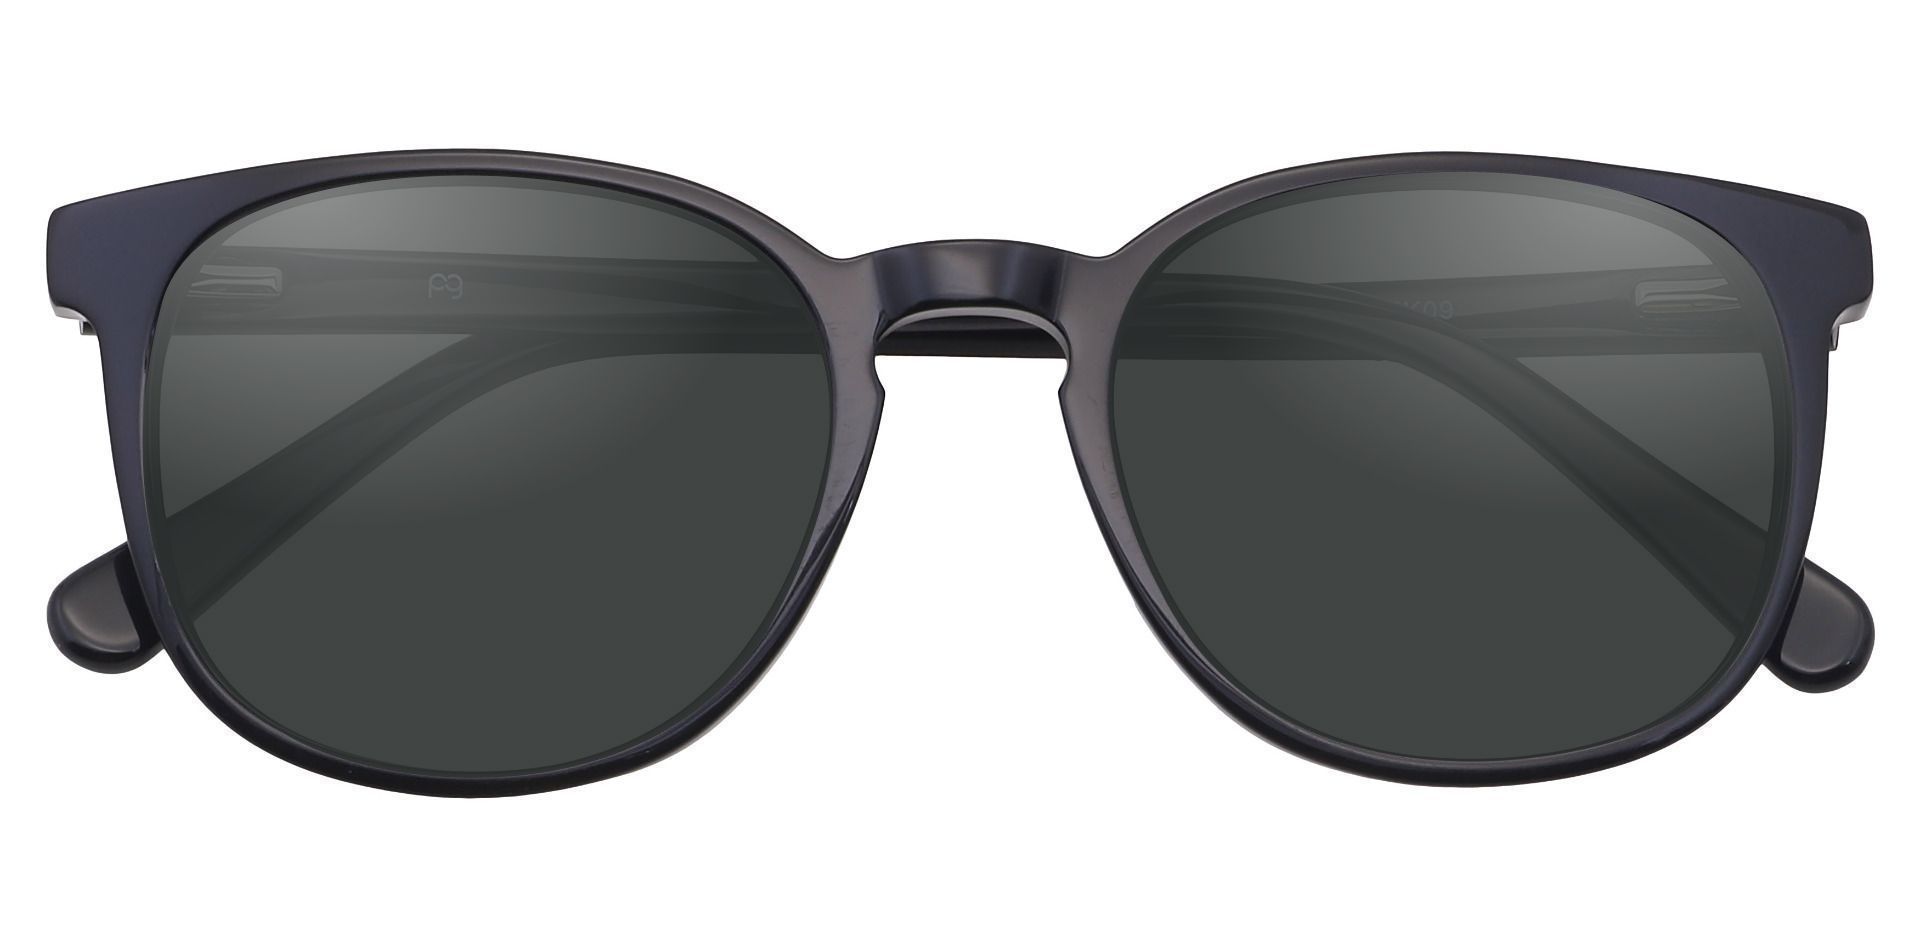 Nebula Round Reading Sunglasses - Black Frame With Gray Lenses